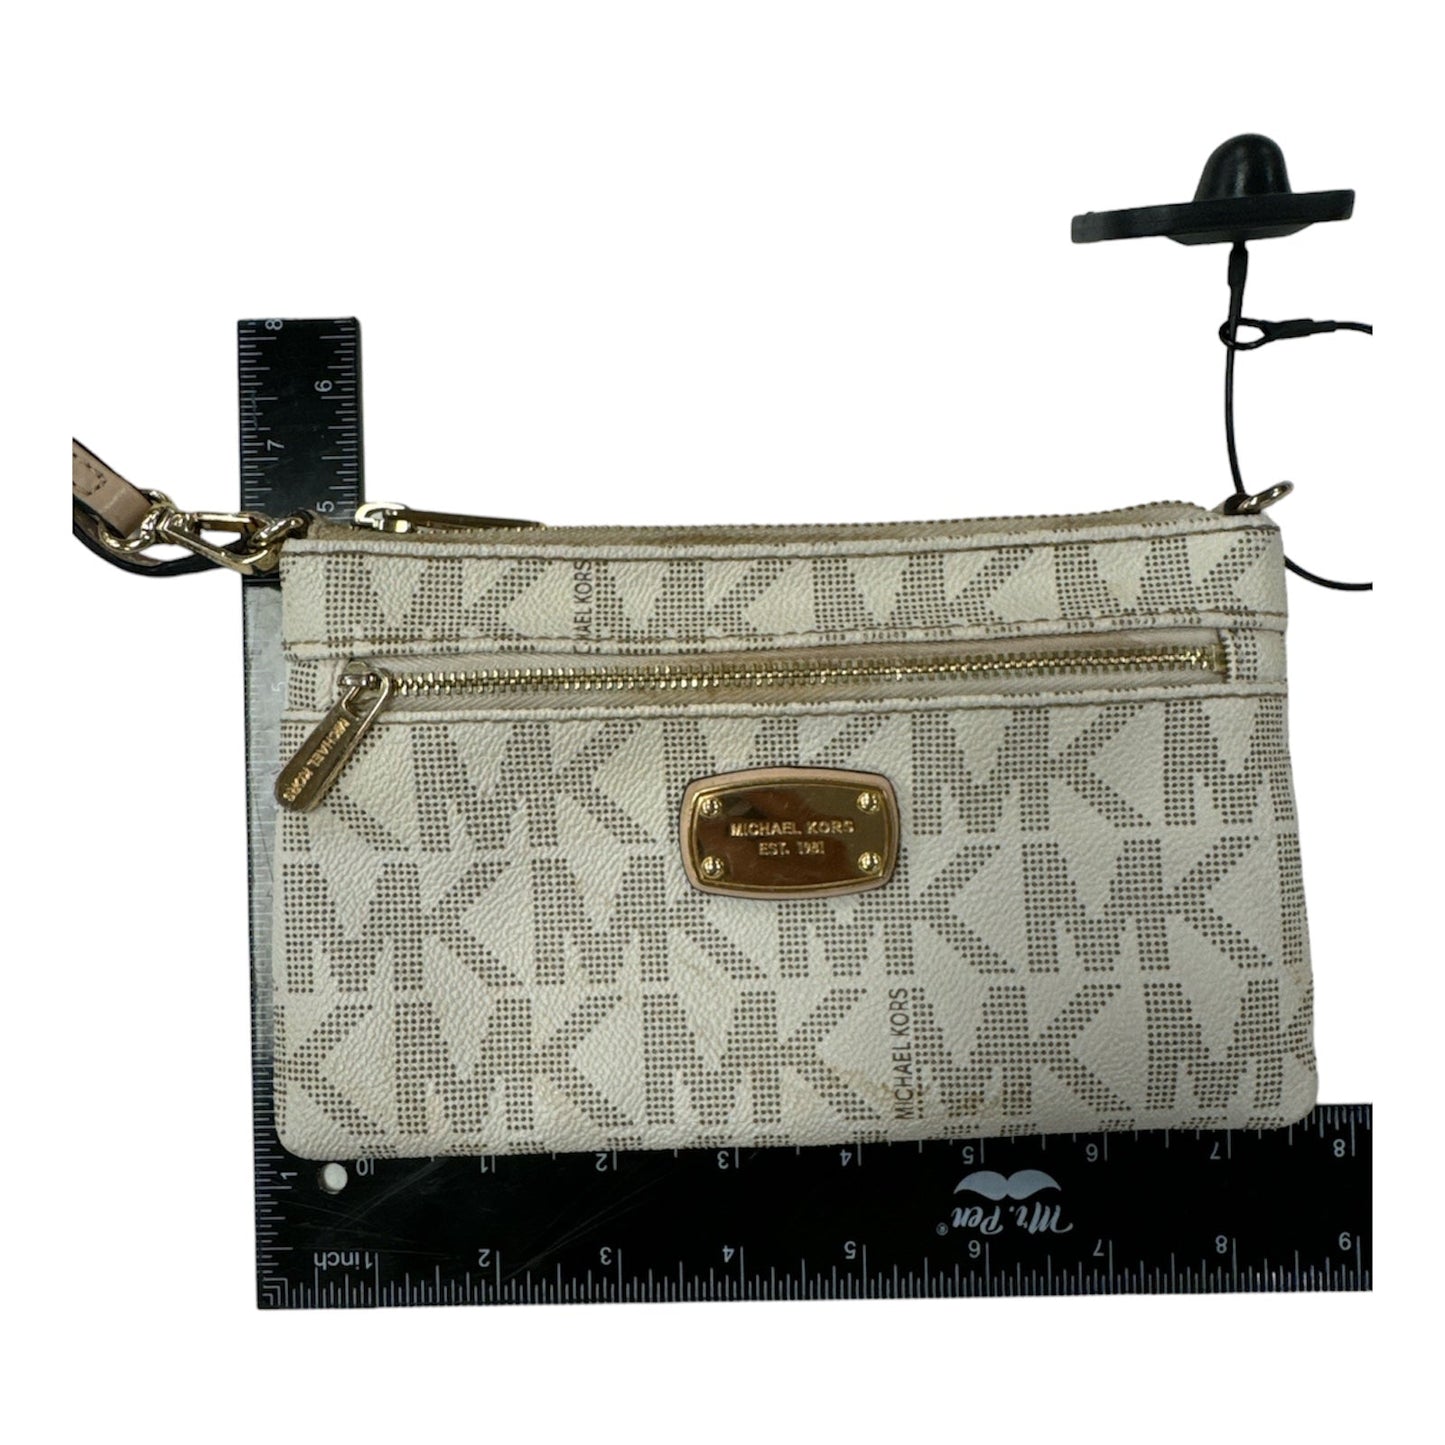 Wristlet Designer Michael Kors, Size Medium